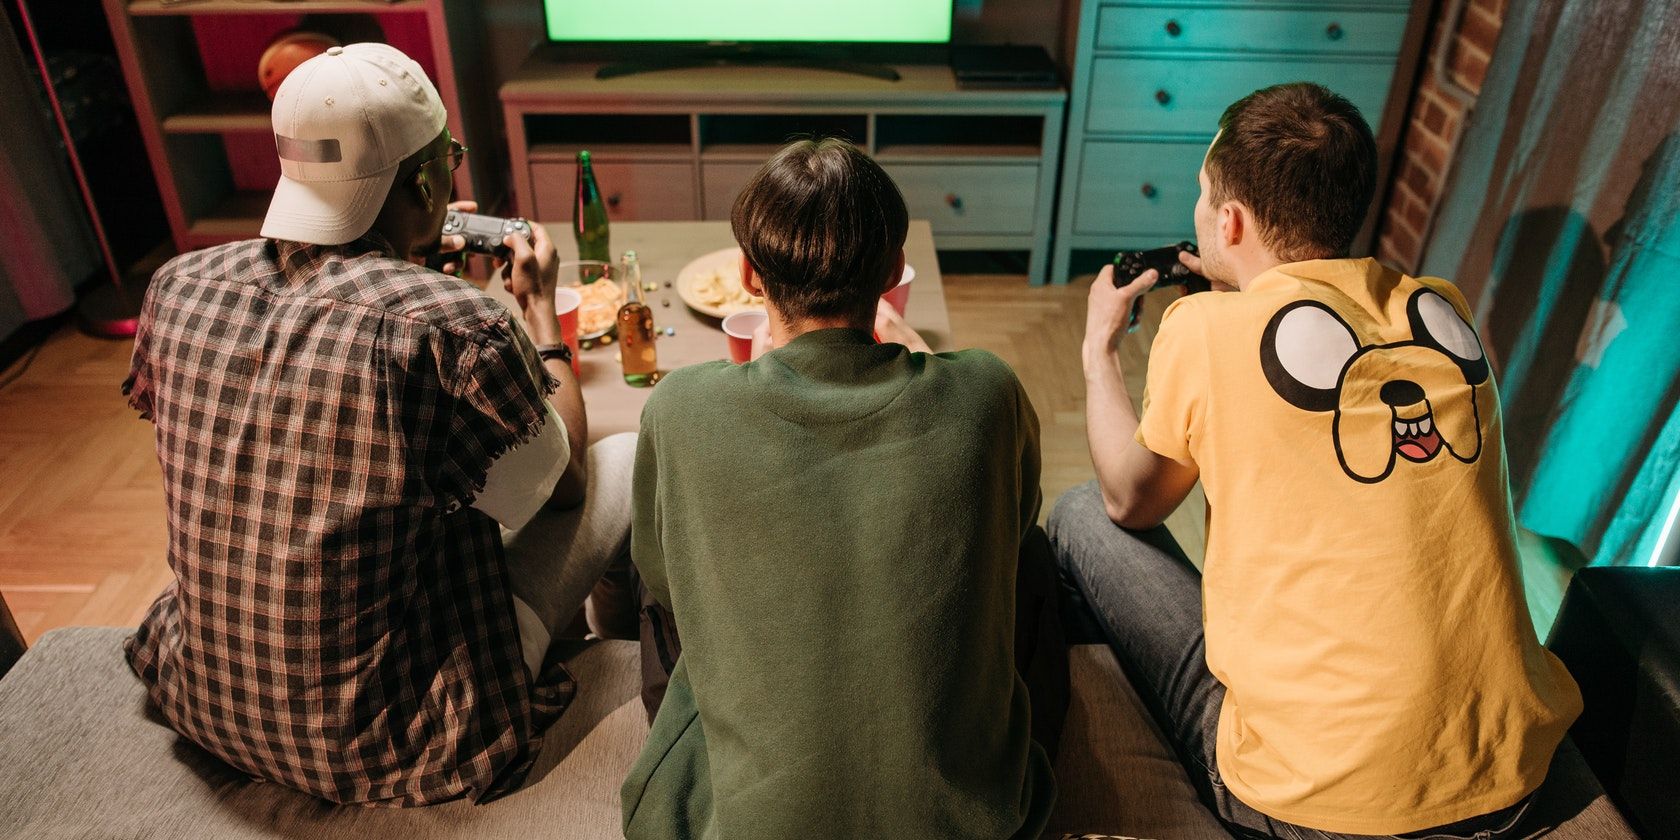 Three men facing a tv playing games